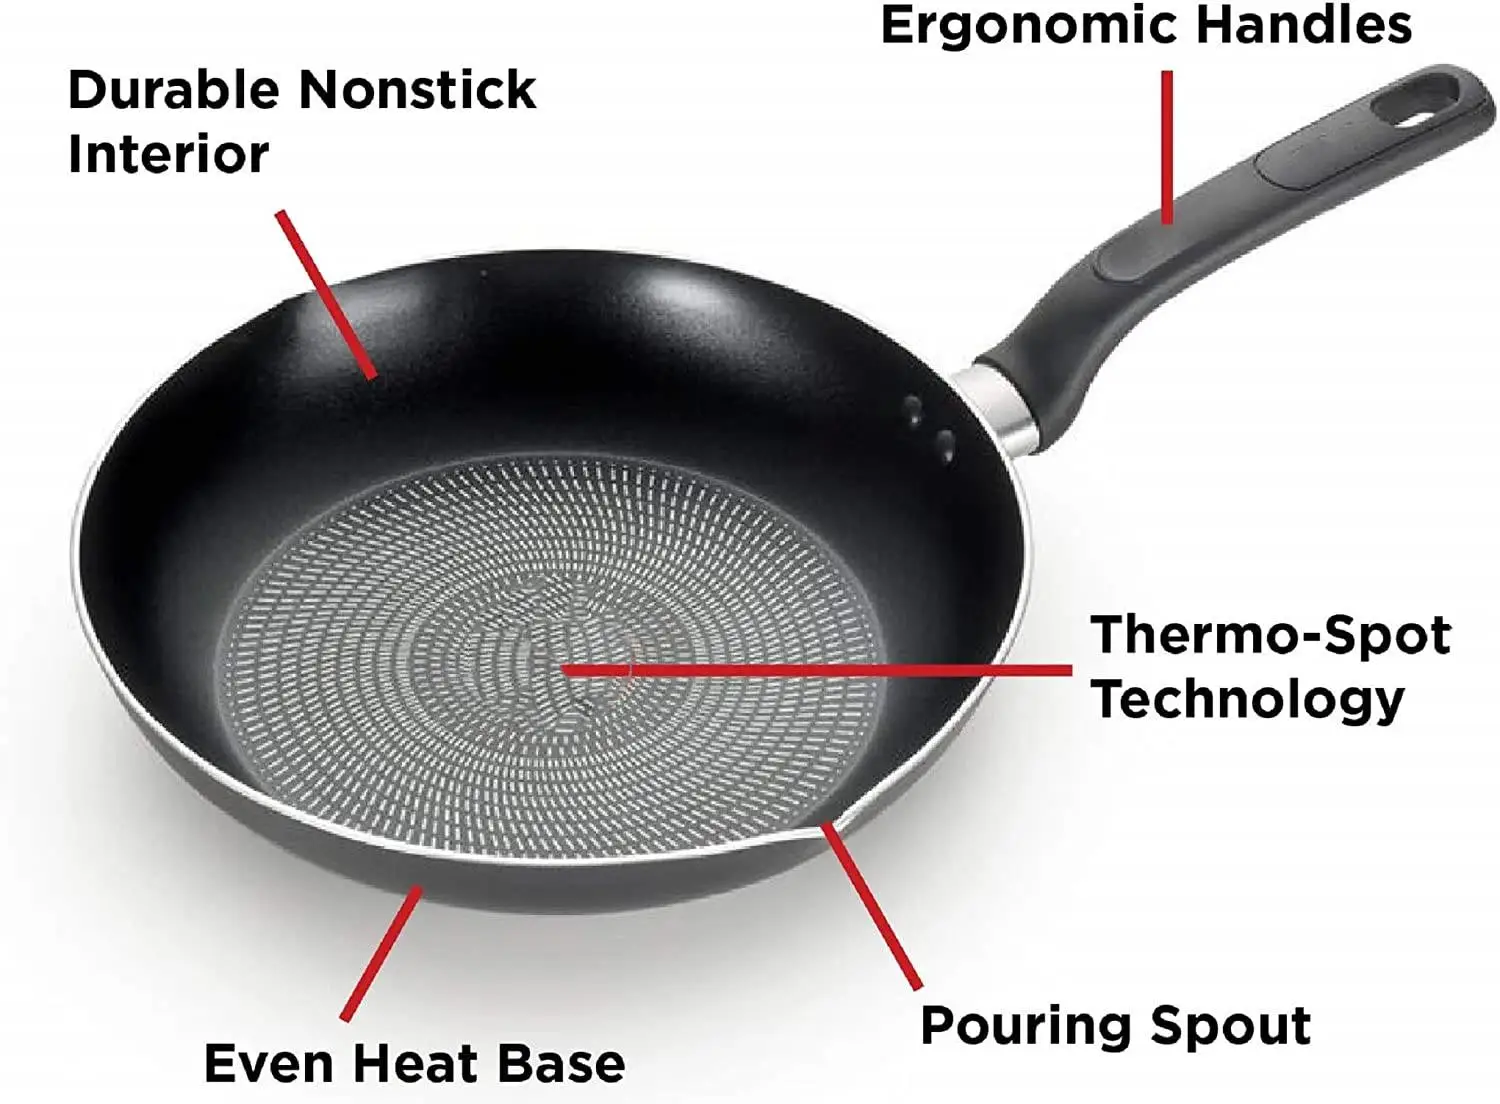 Initiatives Nonstick Cookware Set 18 Piece Pots and Pans, Dishwasher Safe Black